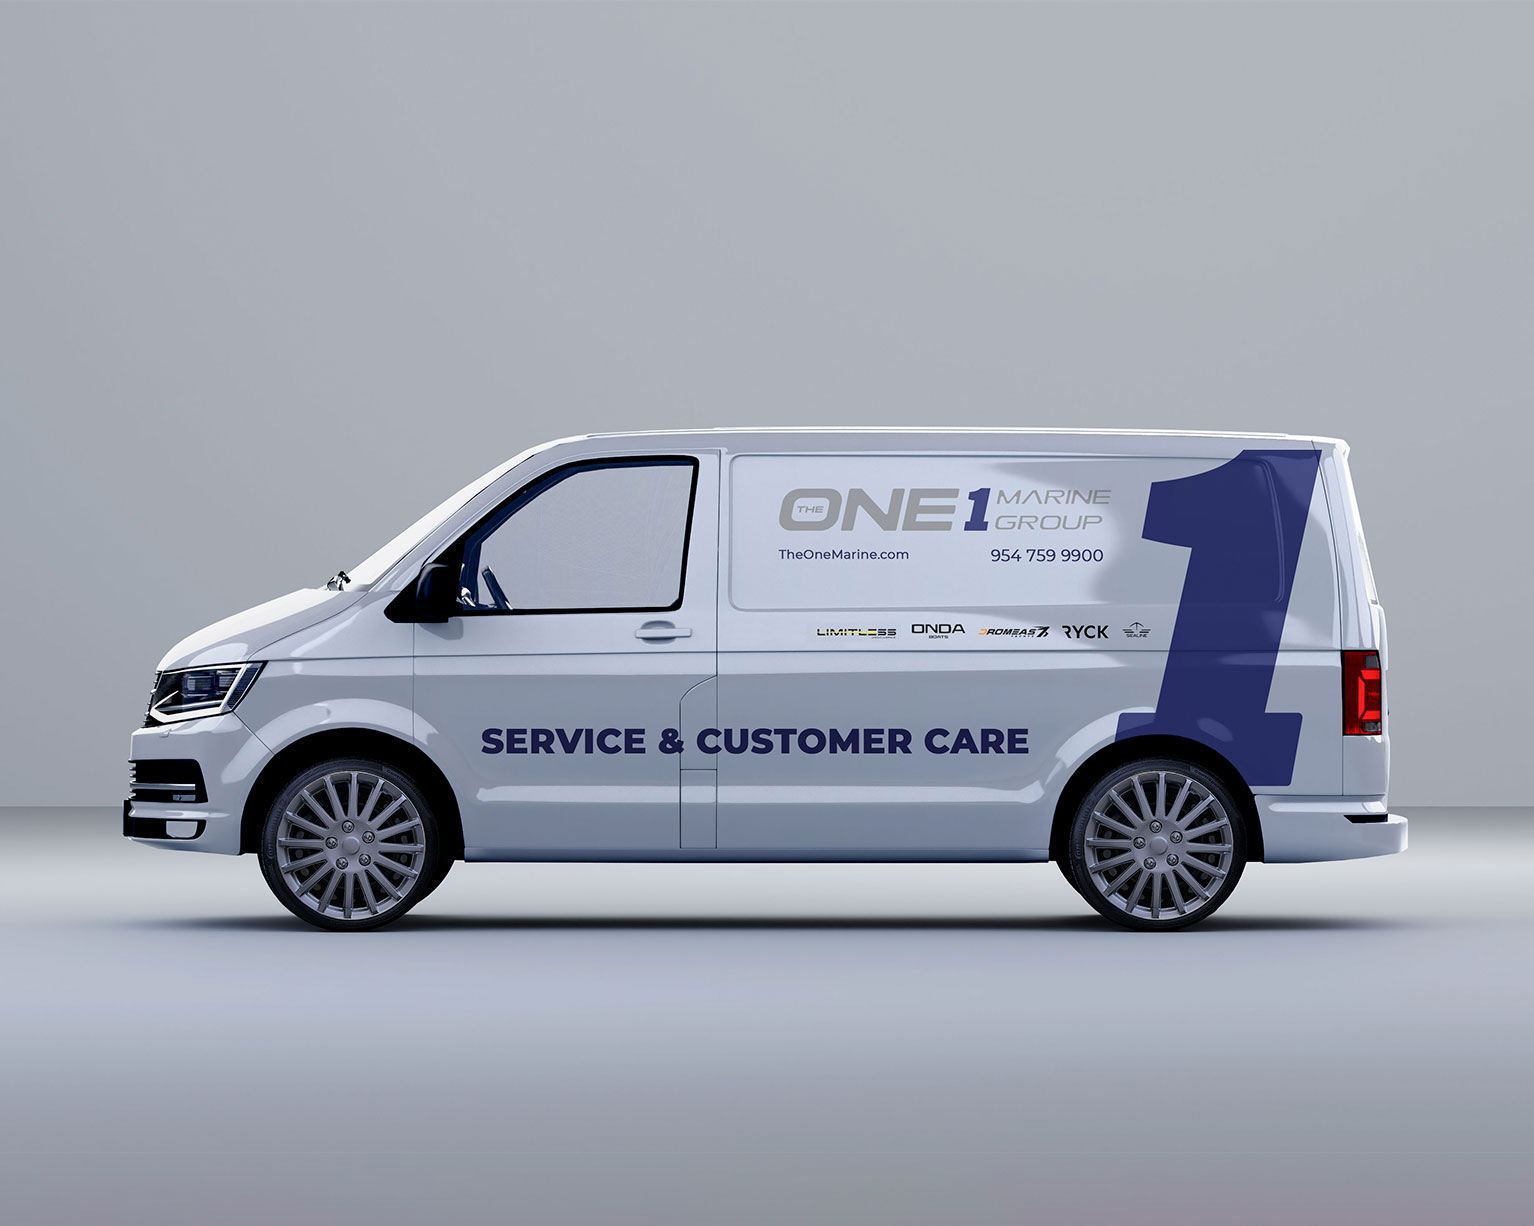 TheOne_Marine_Group_Customer_Care_and_Service